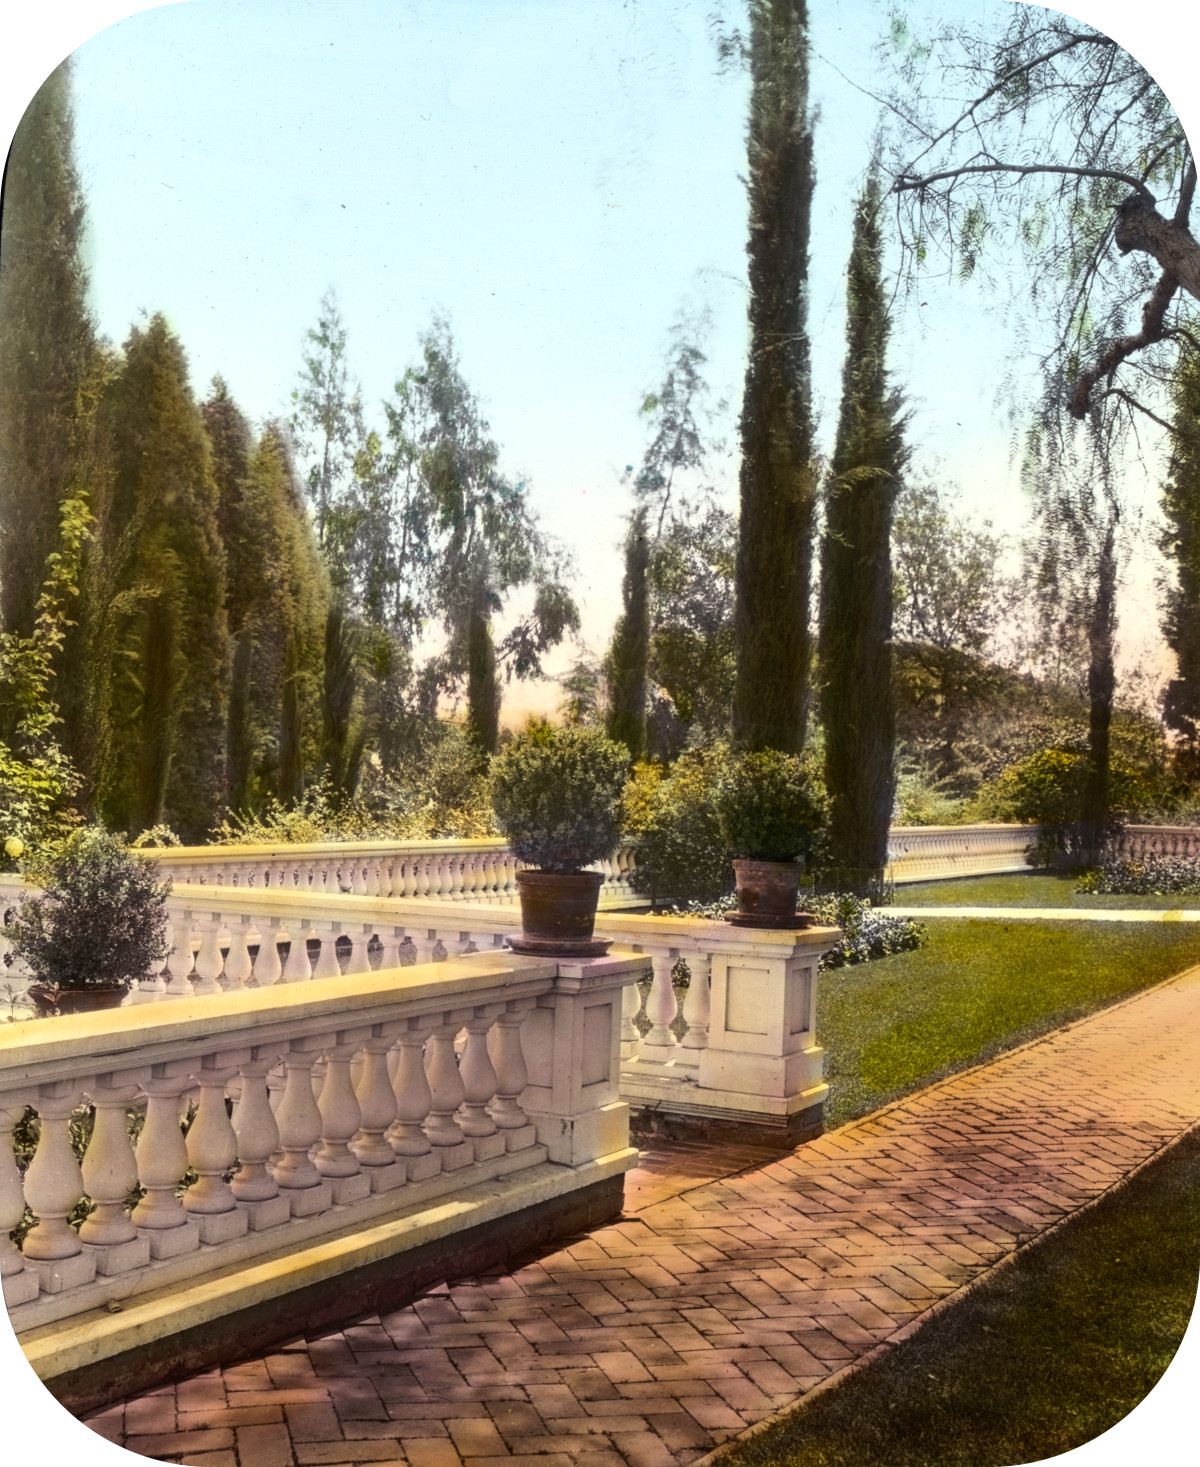 Mrs. Francis Lemoine Loring house, 700 South San Rafael Avenue, San Rafael Heights, Pasadena, California. Terrace balustrade